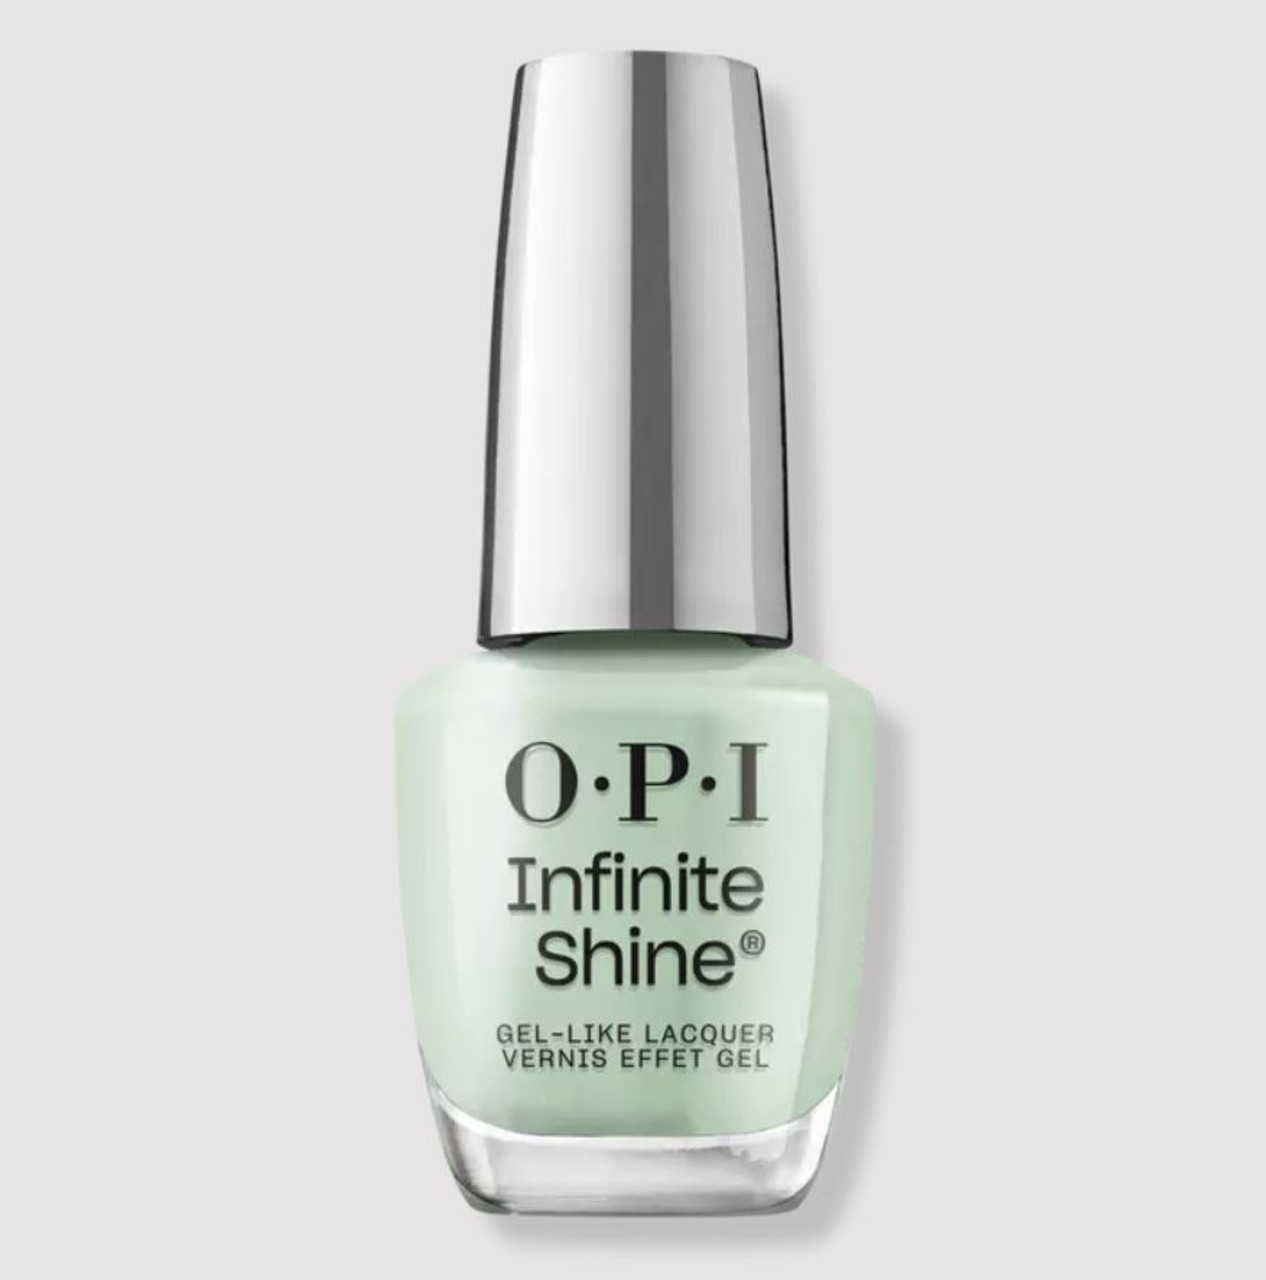 OPI Infinite Shine In Mint Condition - .5 Oz / 15 mL